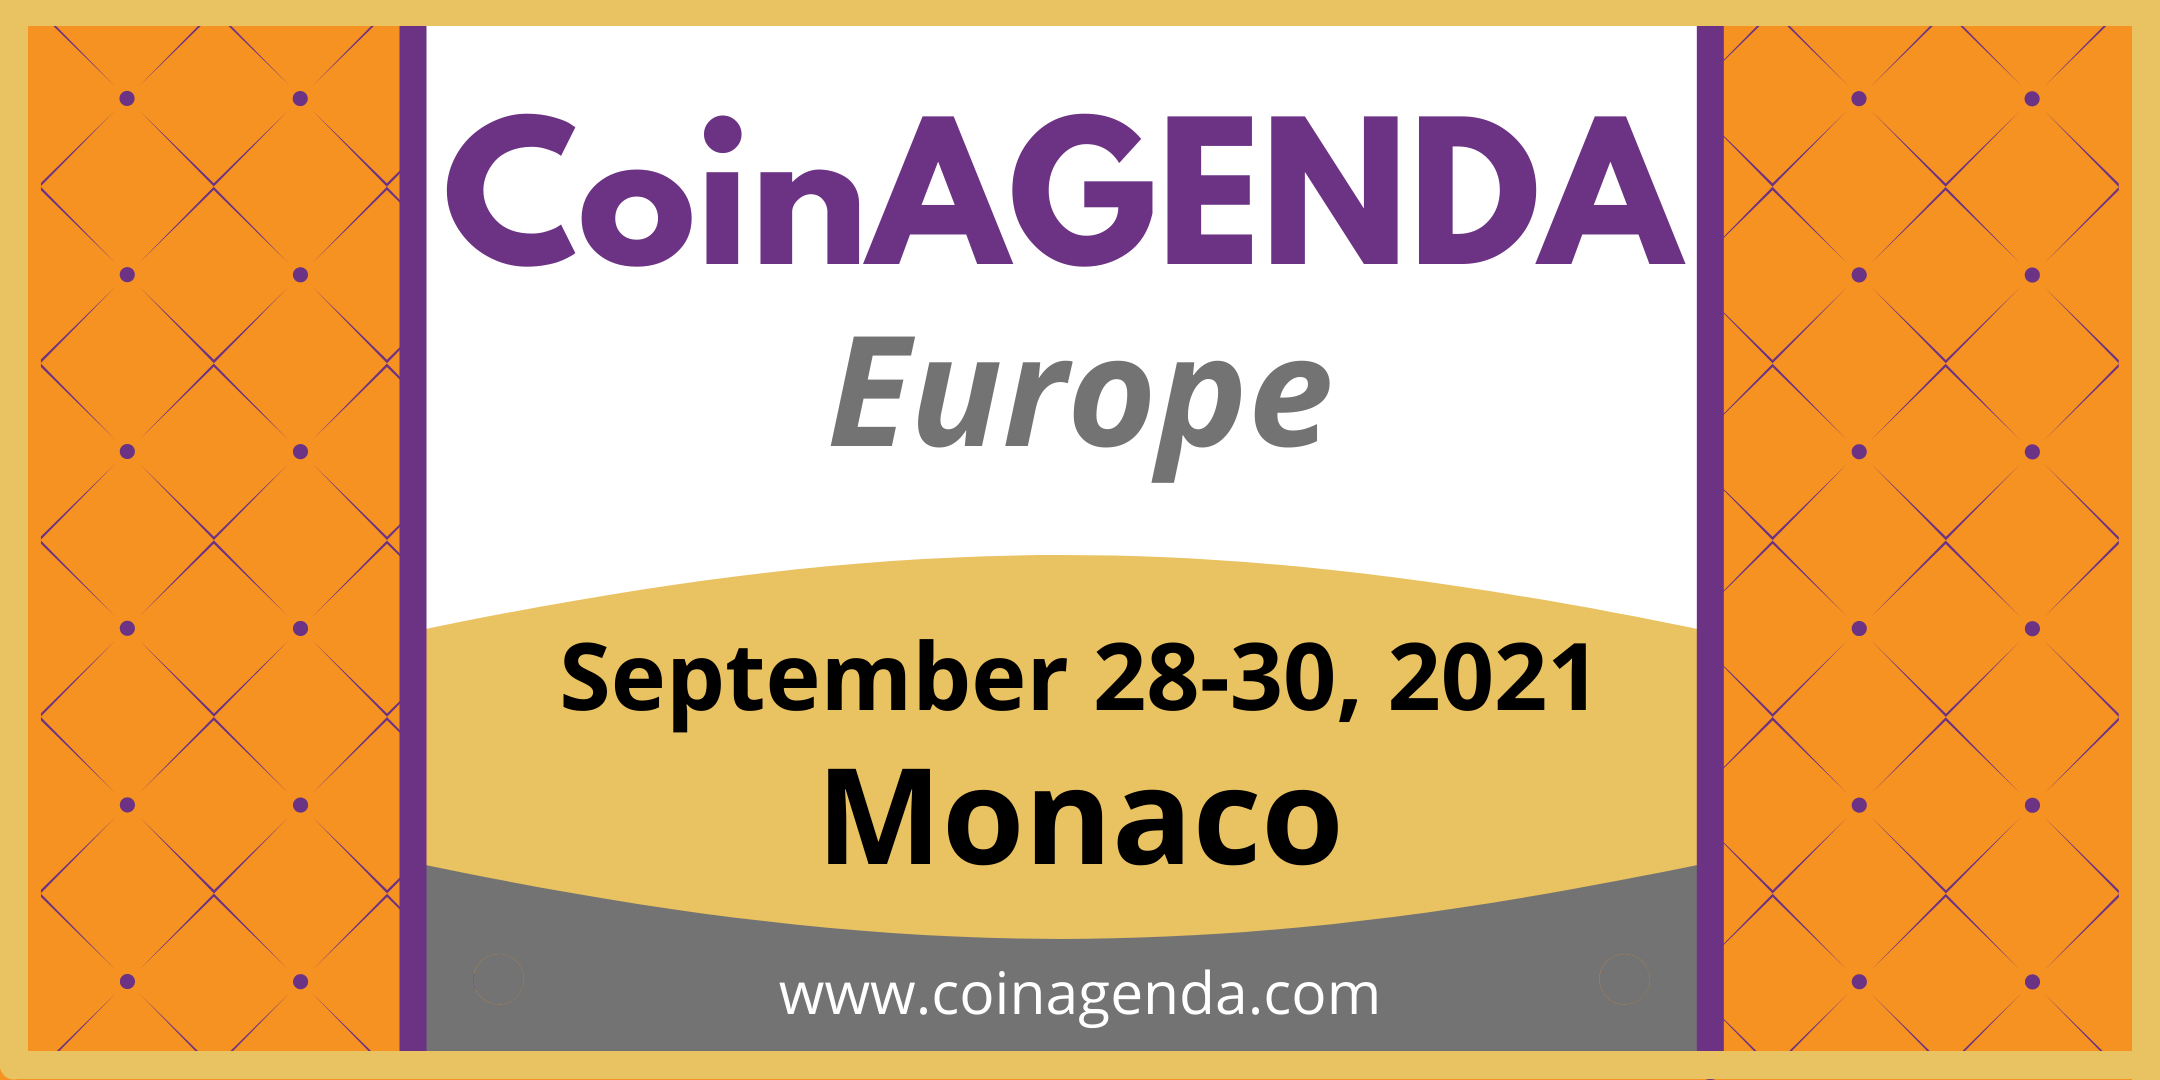 CoinAgenda Europe organized by CoinAgenda